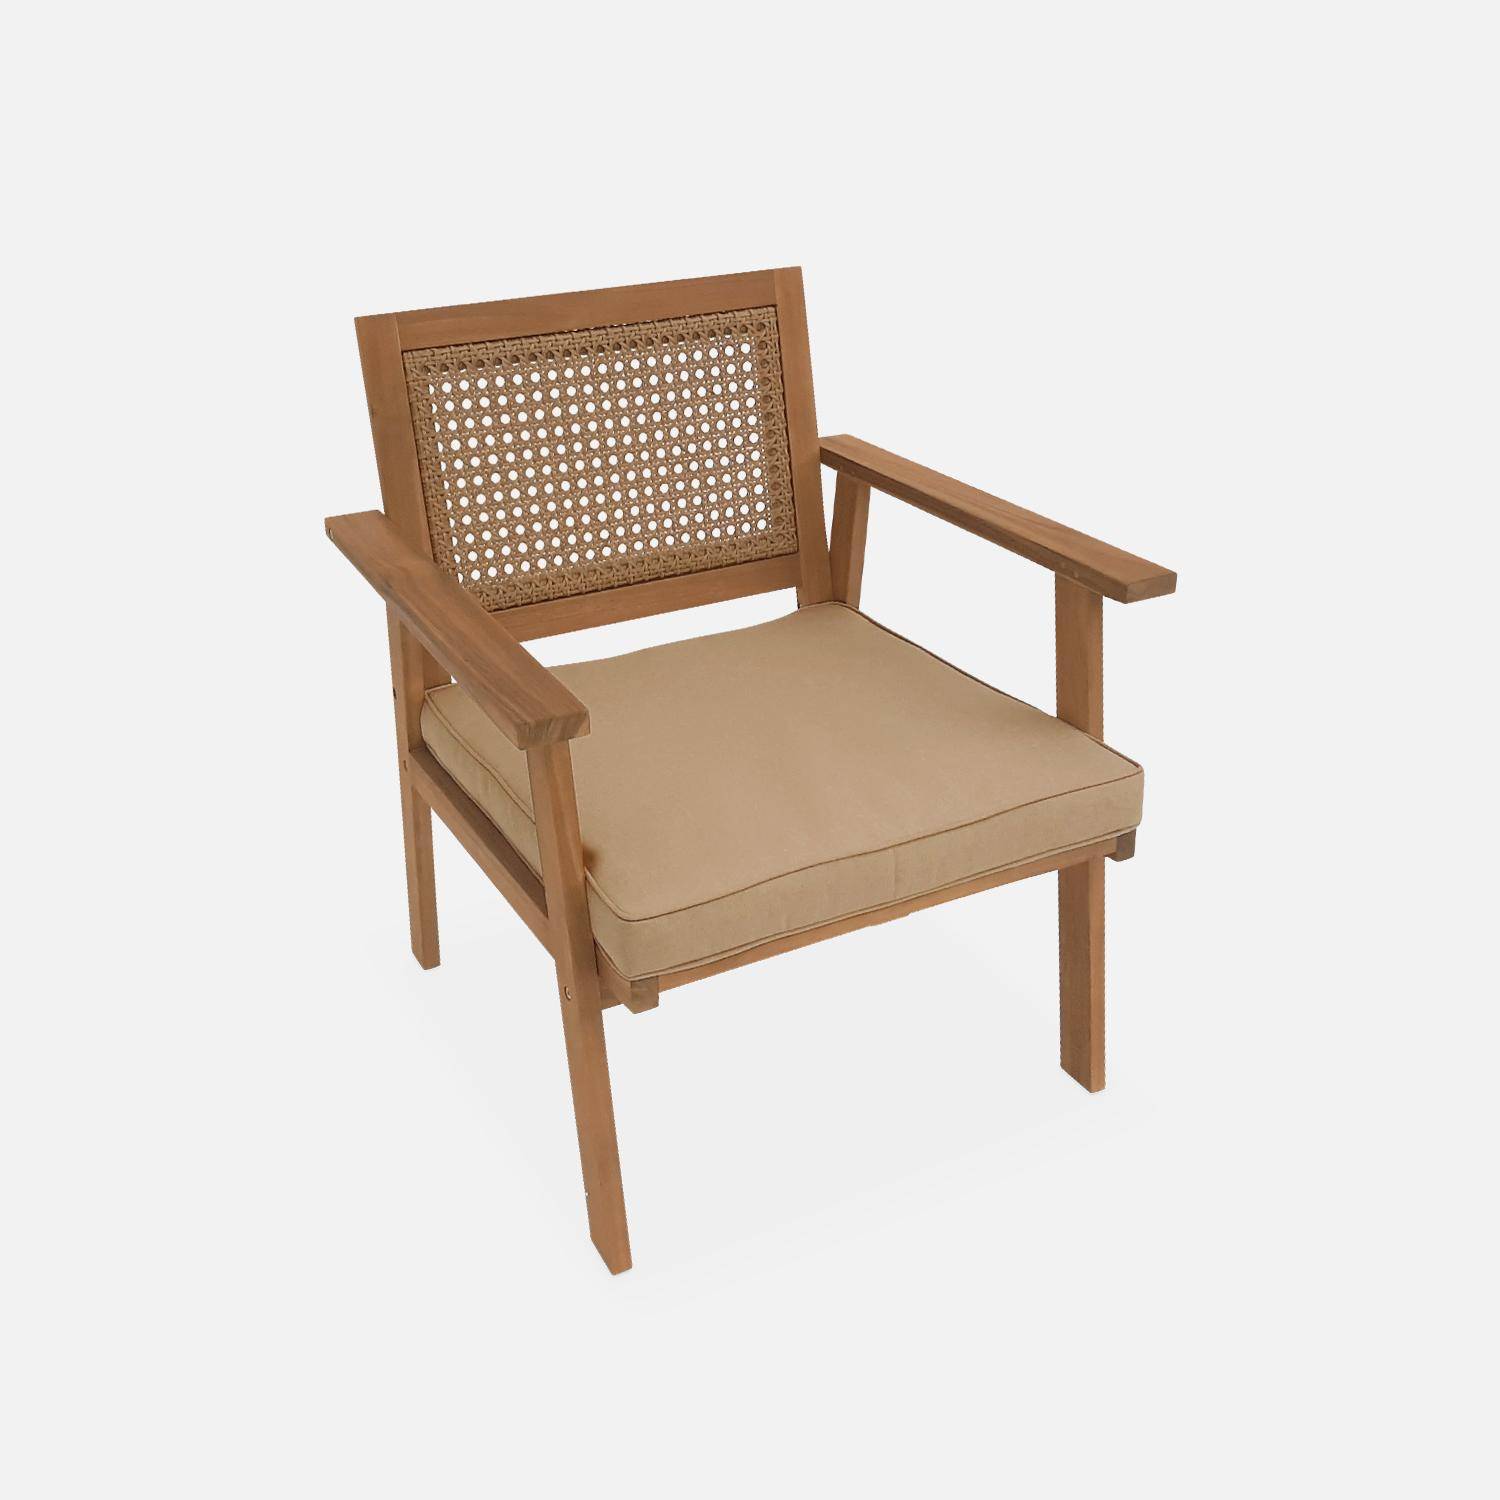 4-seater wood and cane rattan garden sofa set, Teak colour Photo6